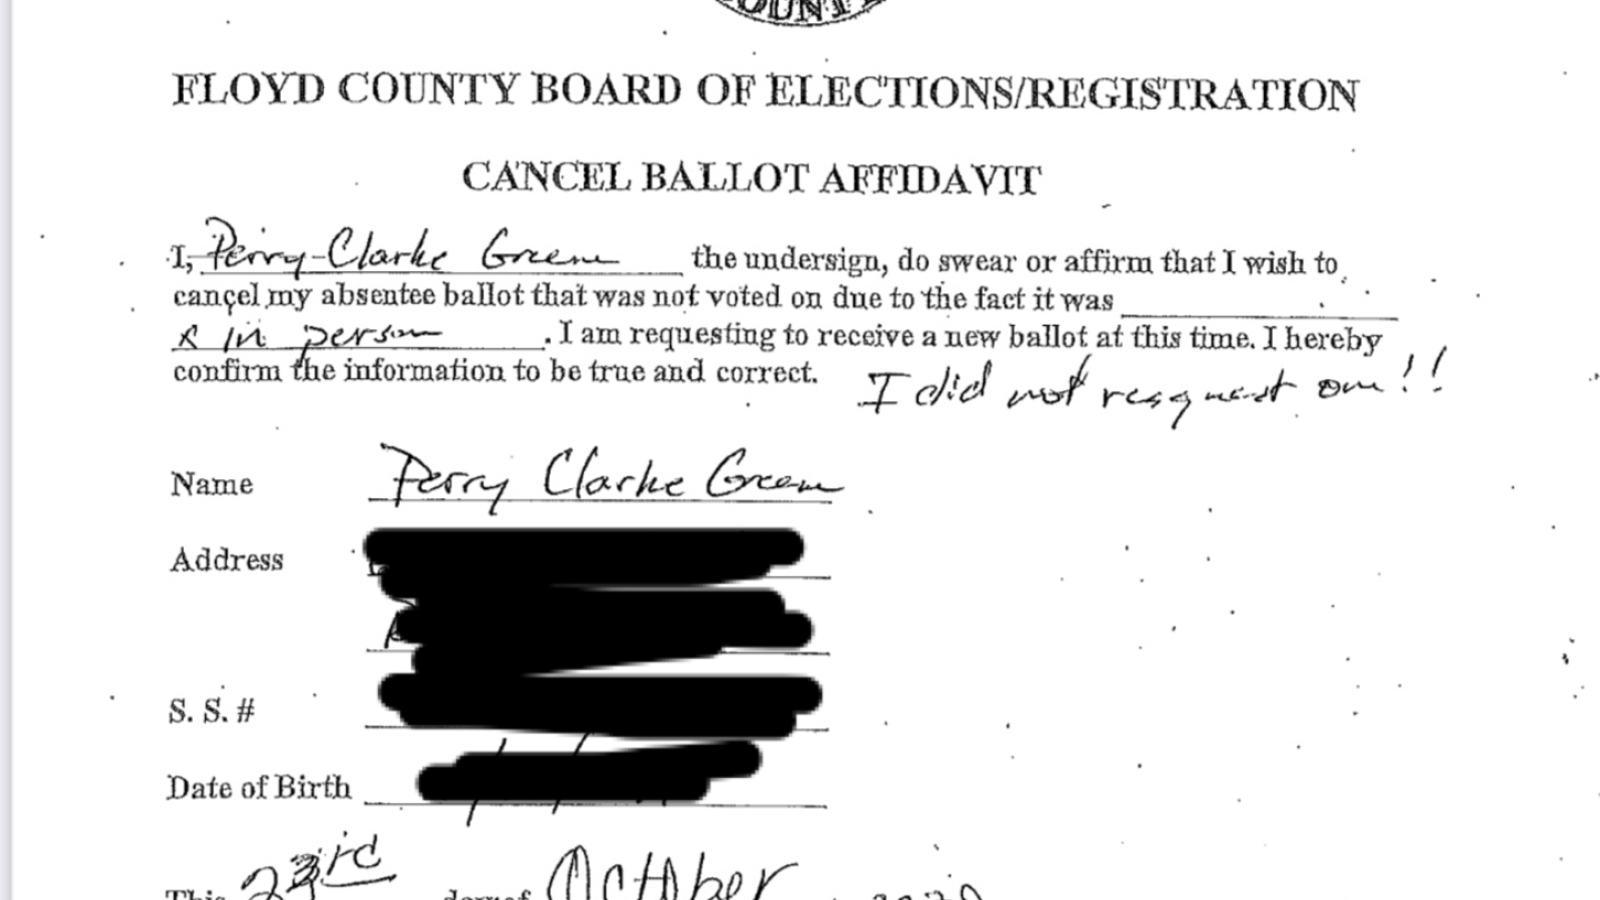 Perry Greene cancel ballot affidavit